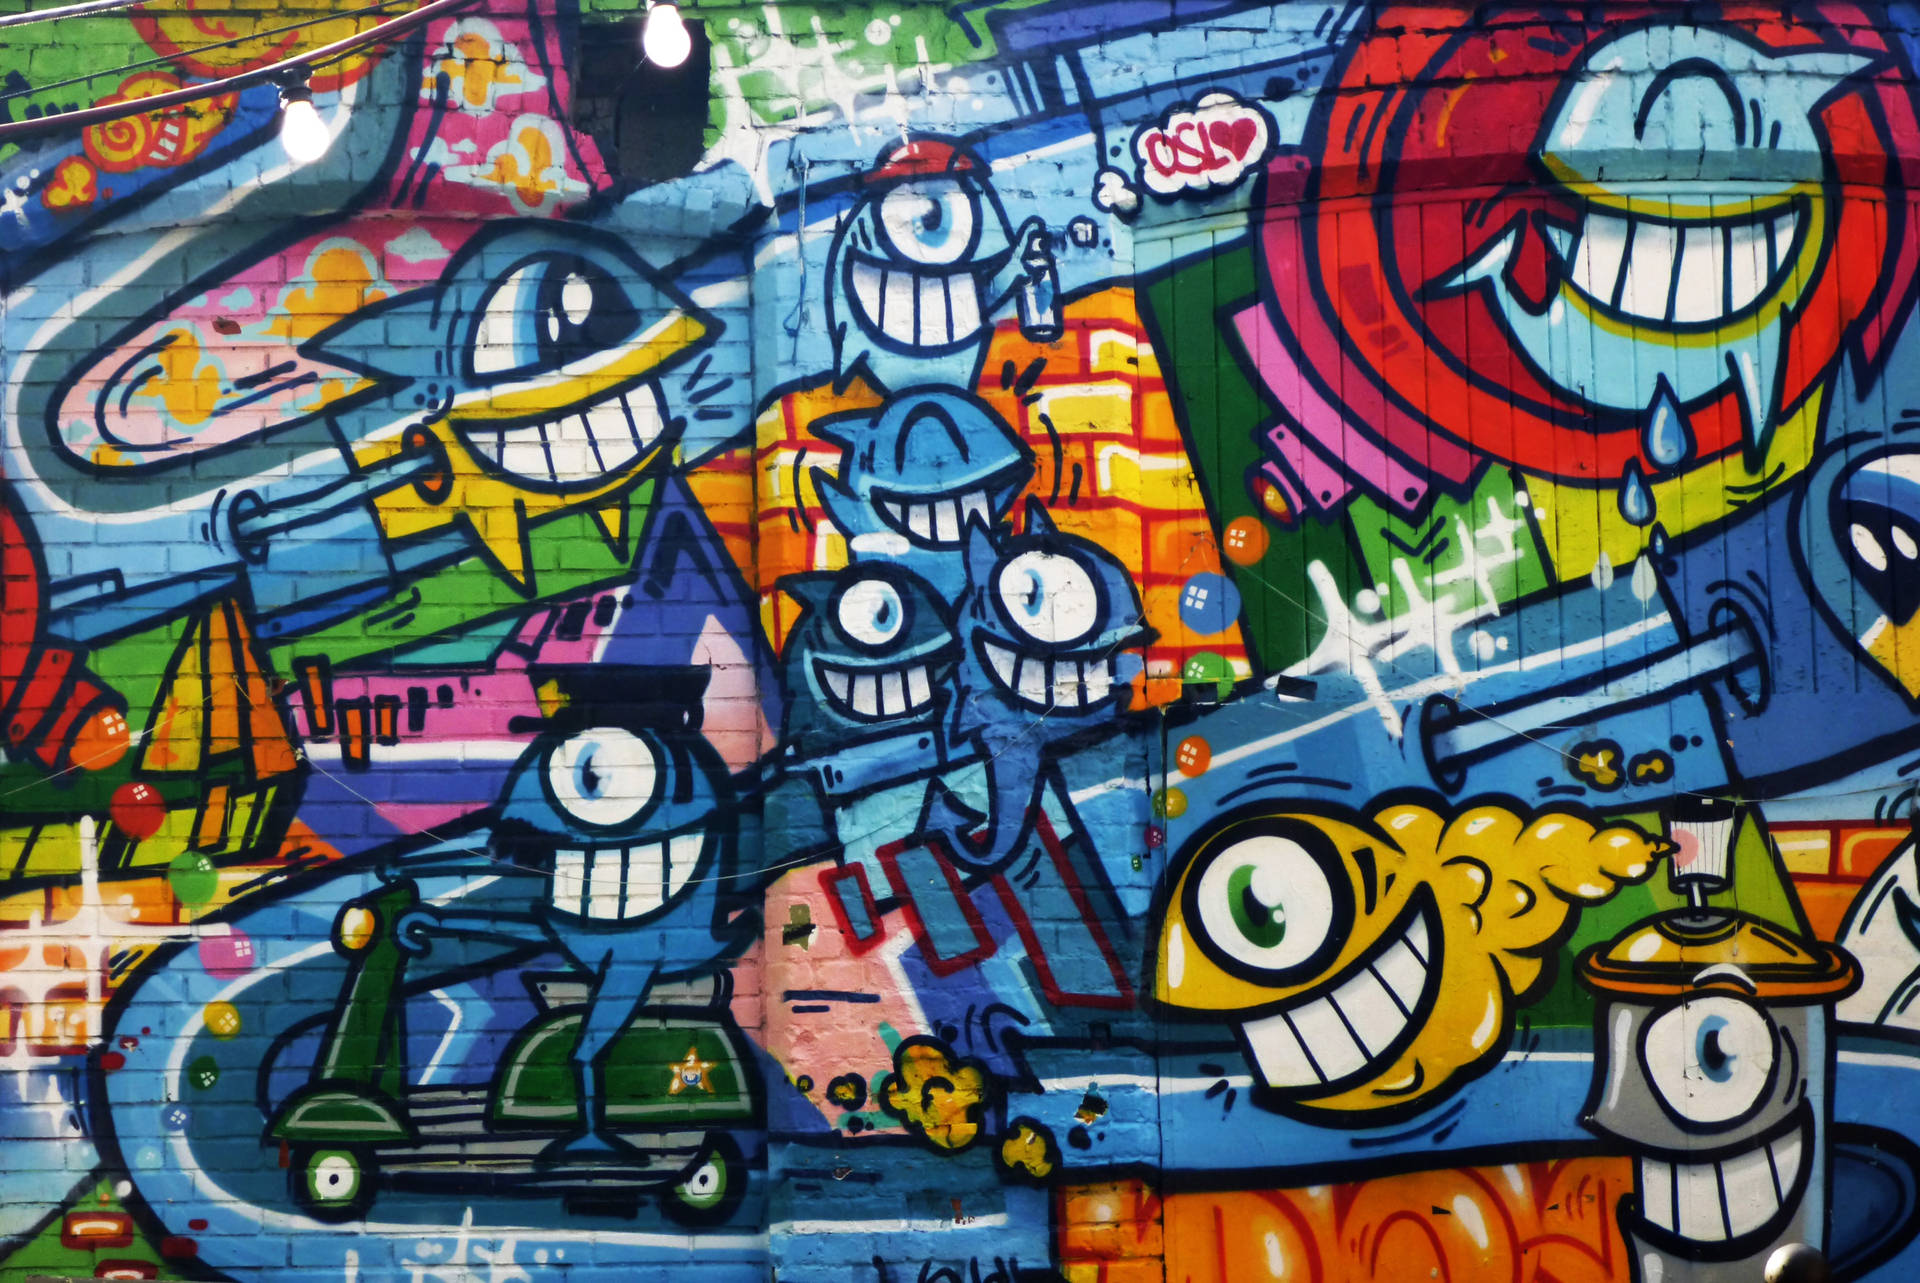 Cryptic creatures come alive in this vibrant graffiti. Wallpaper